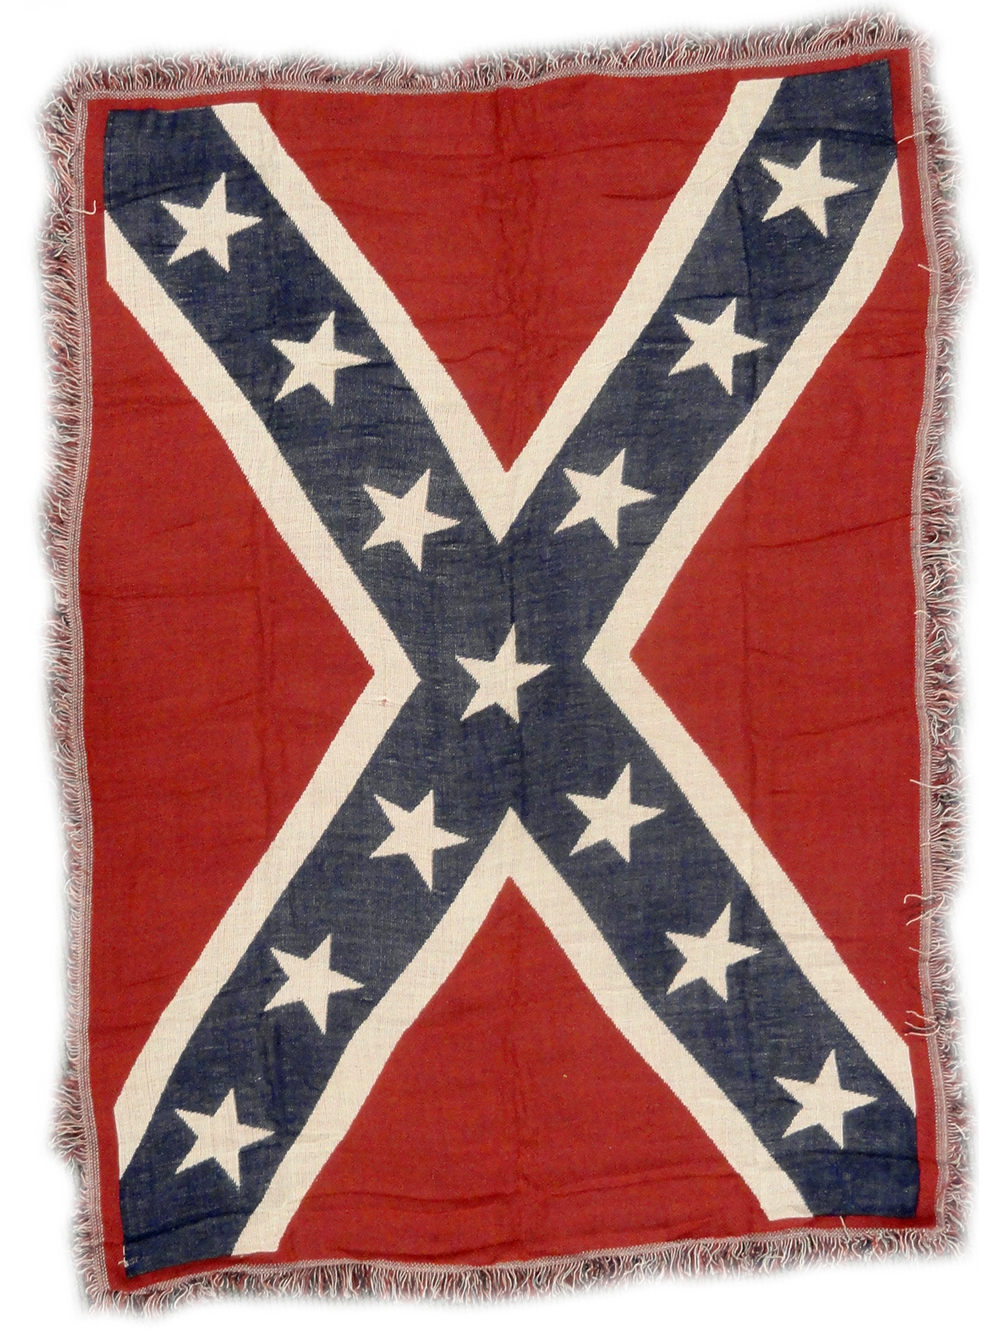 Confederate Rebel Battle Flag Woven Blanket (4 x 6 FT). bewild.com. helpful...